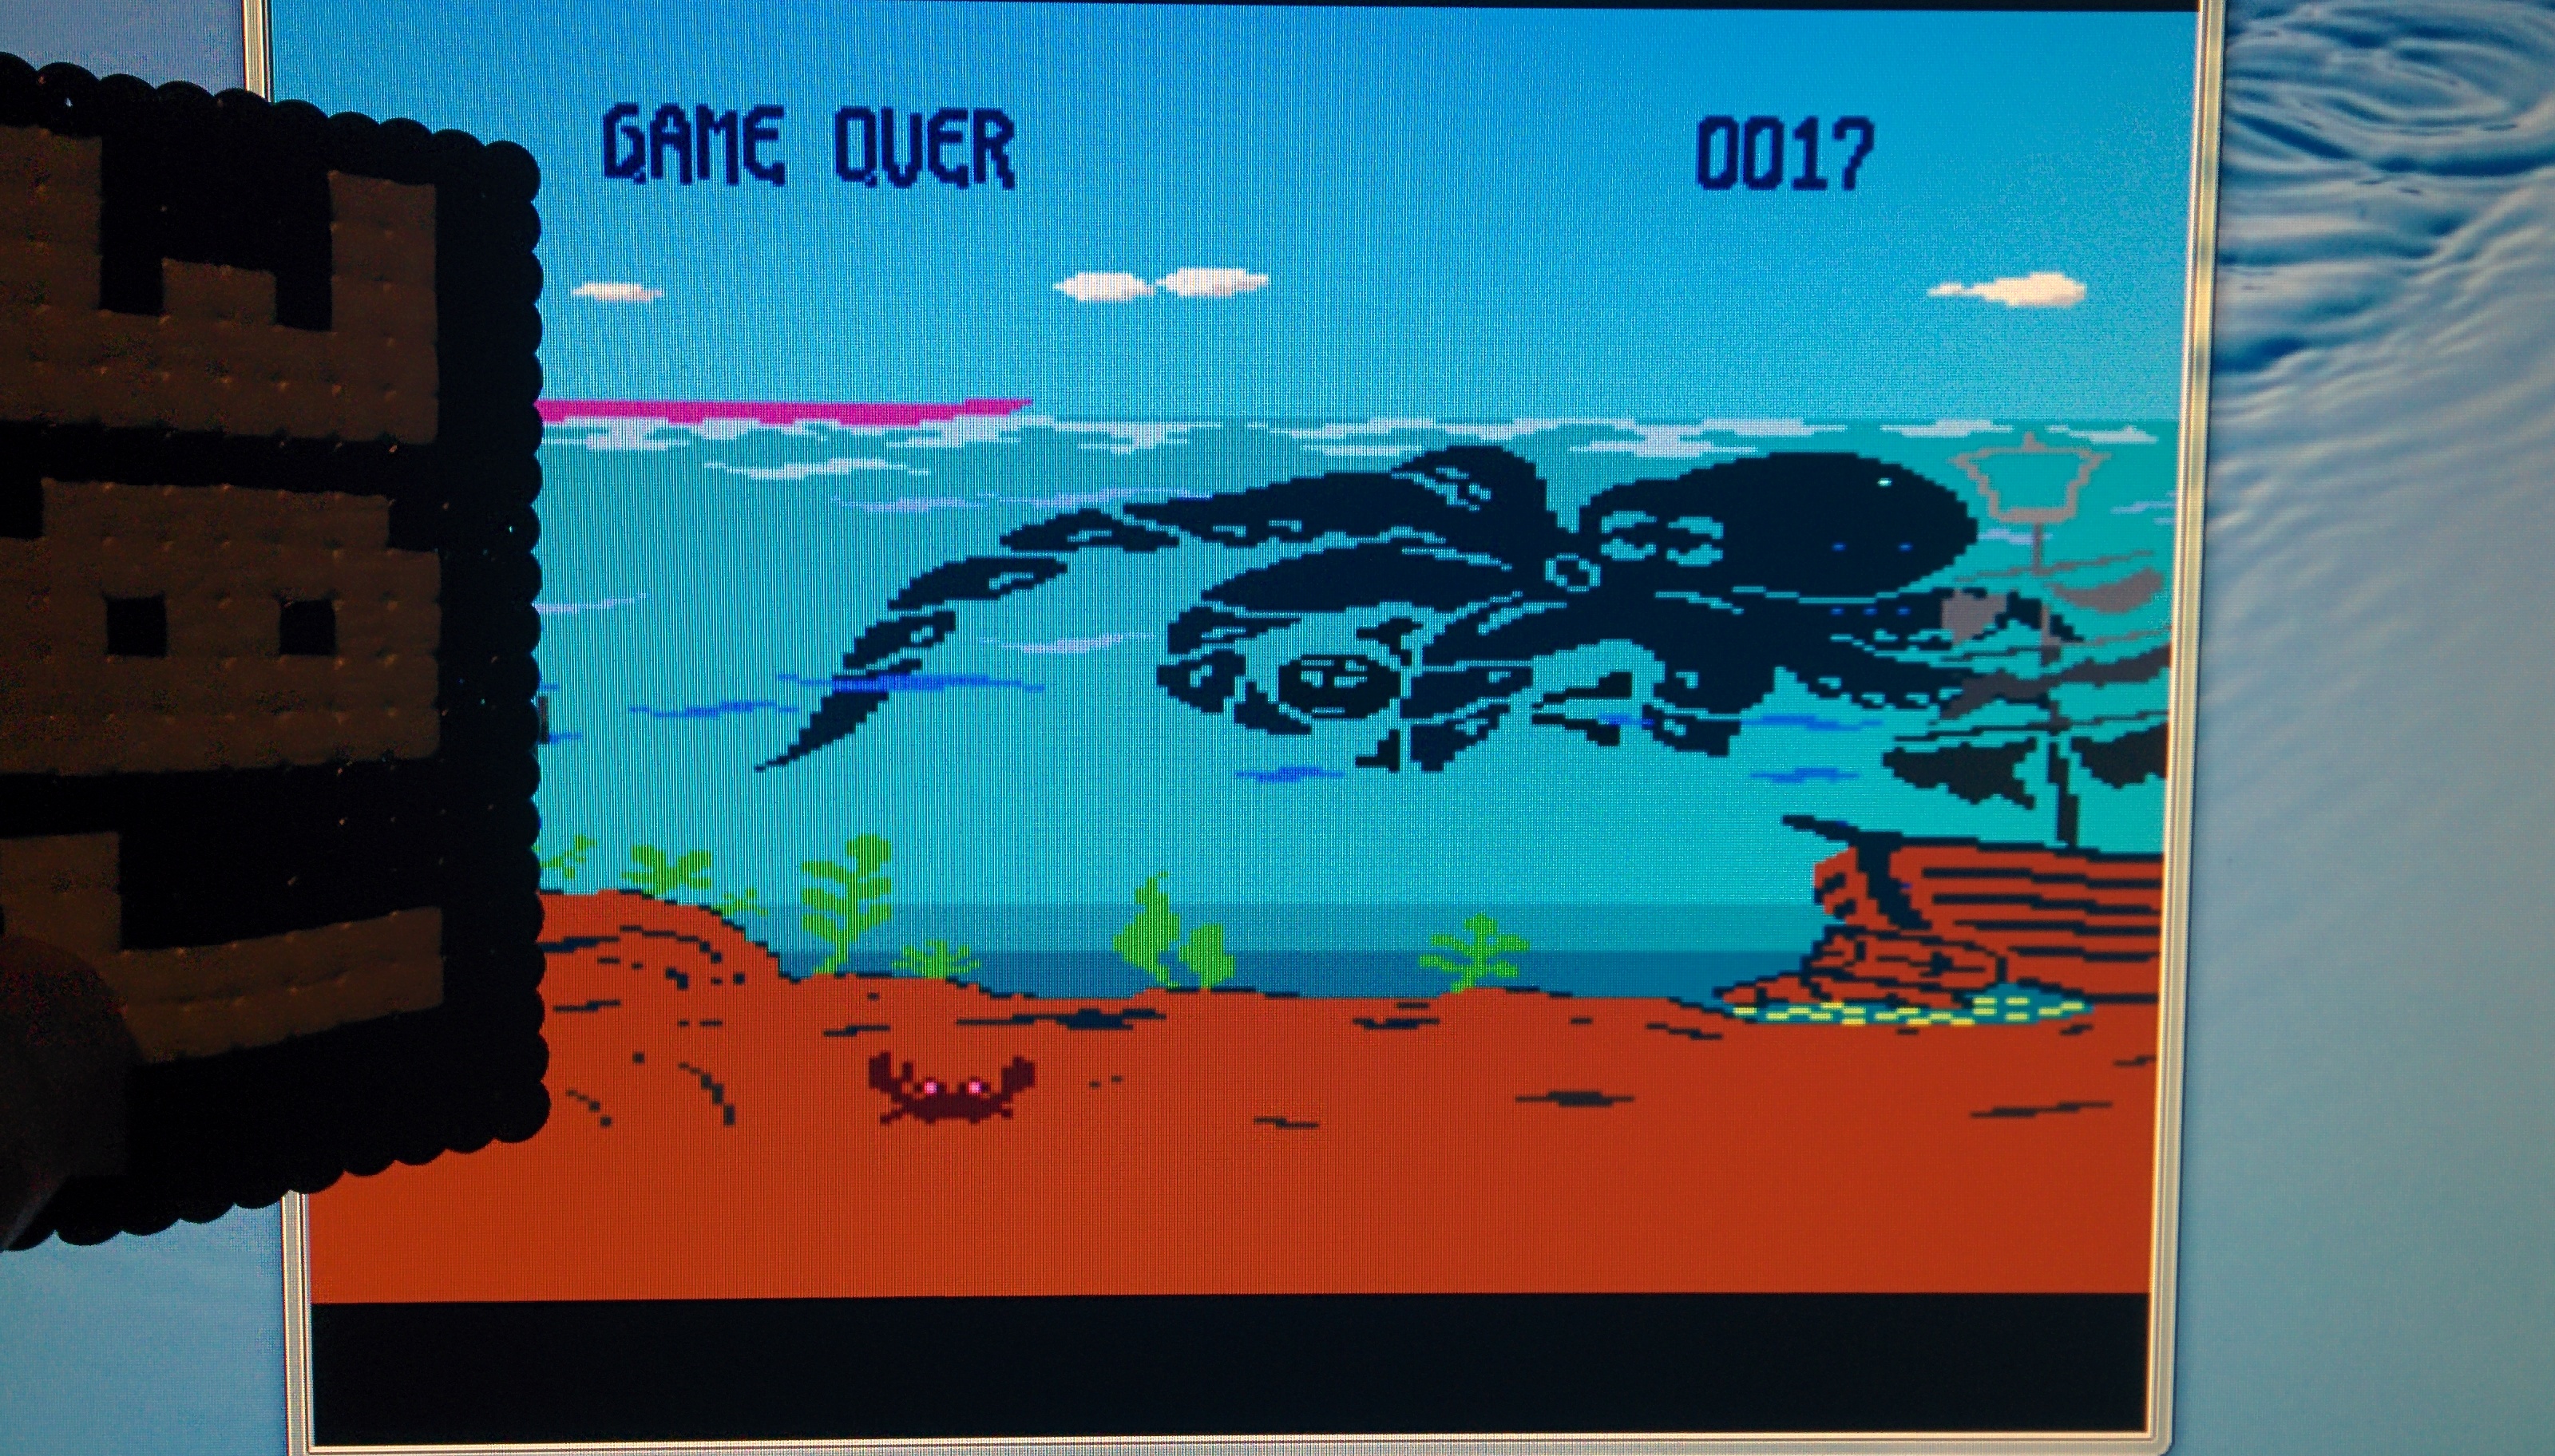 Sixx: Octopus (Atari 400/800/XL/XE Emulated) 17 points on 2014-10-16 15:00:51